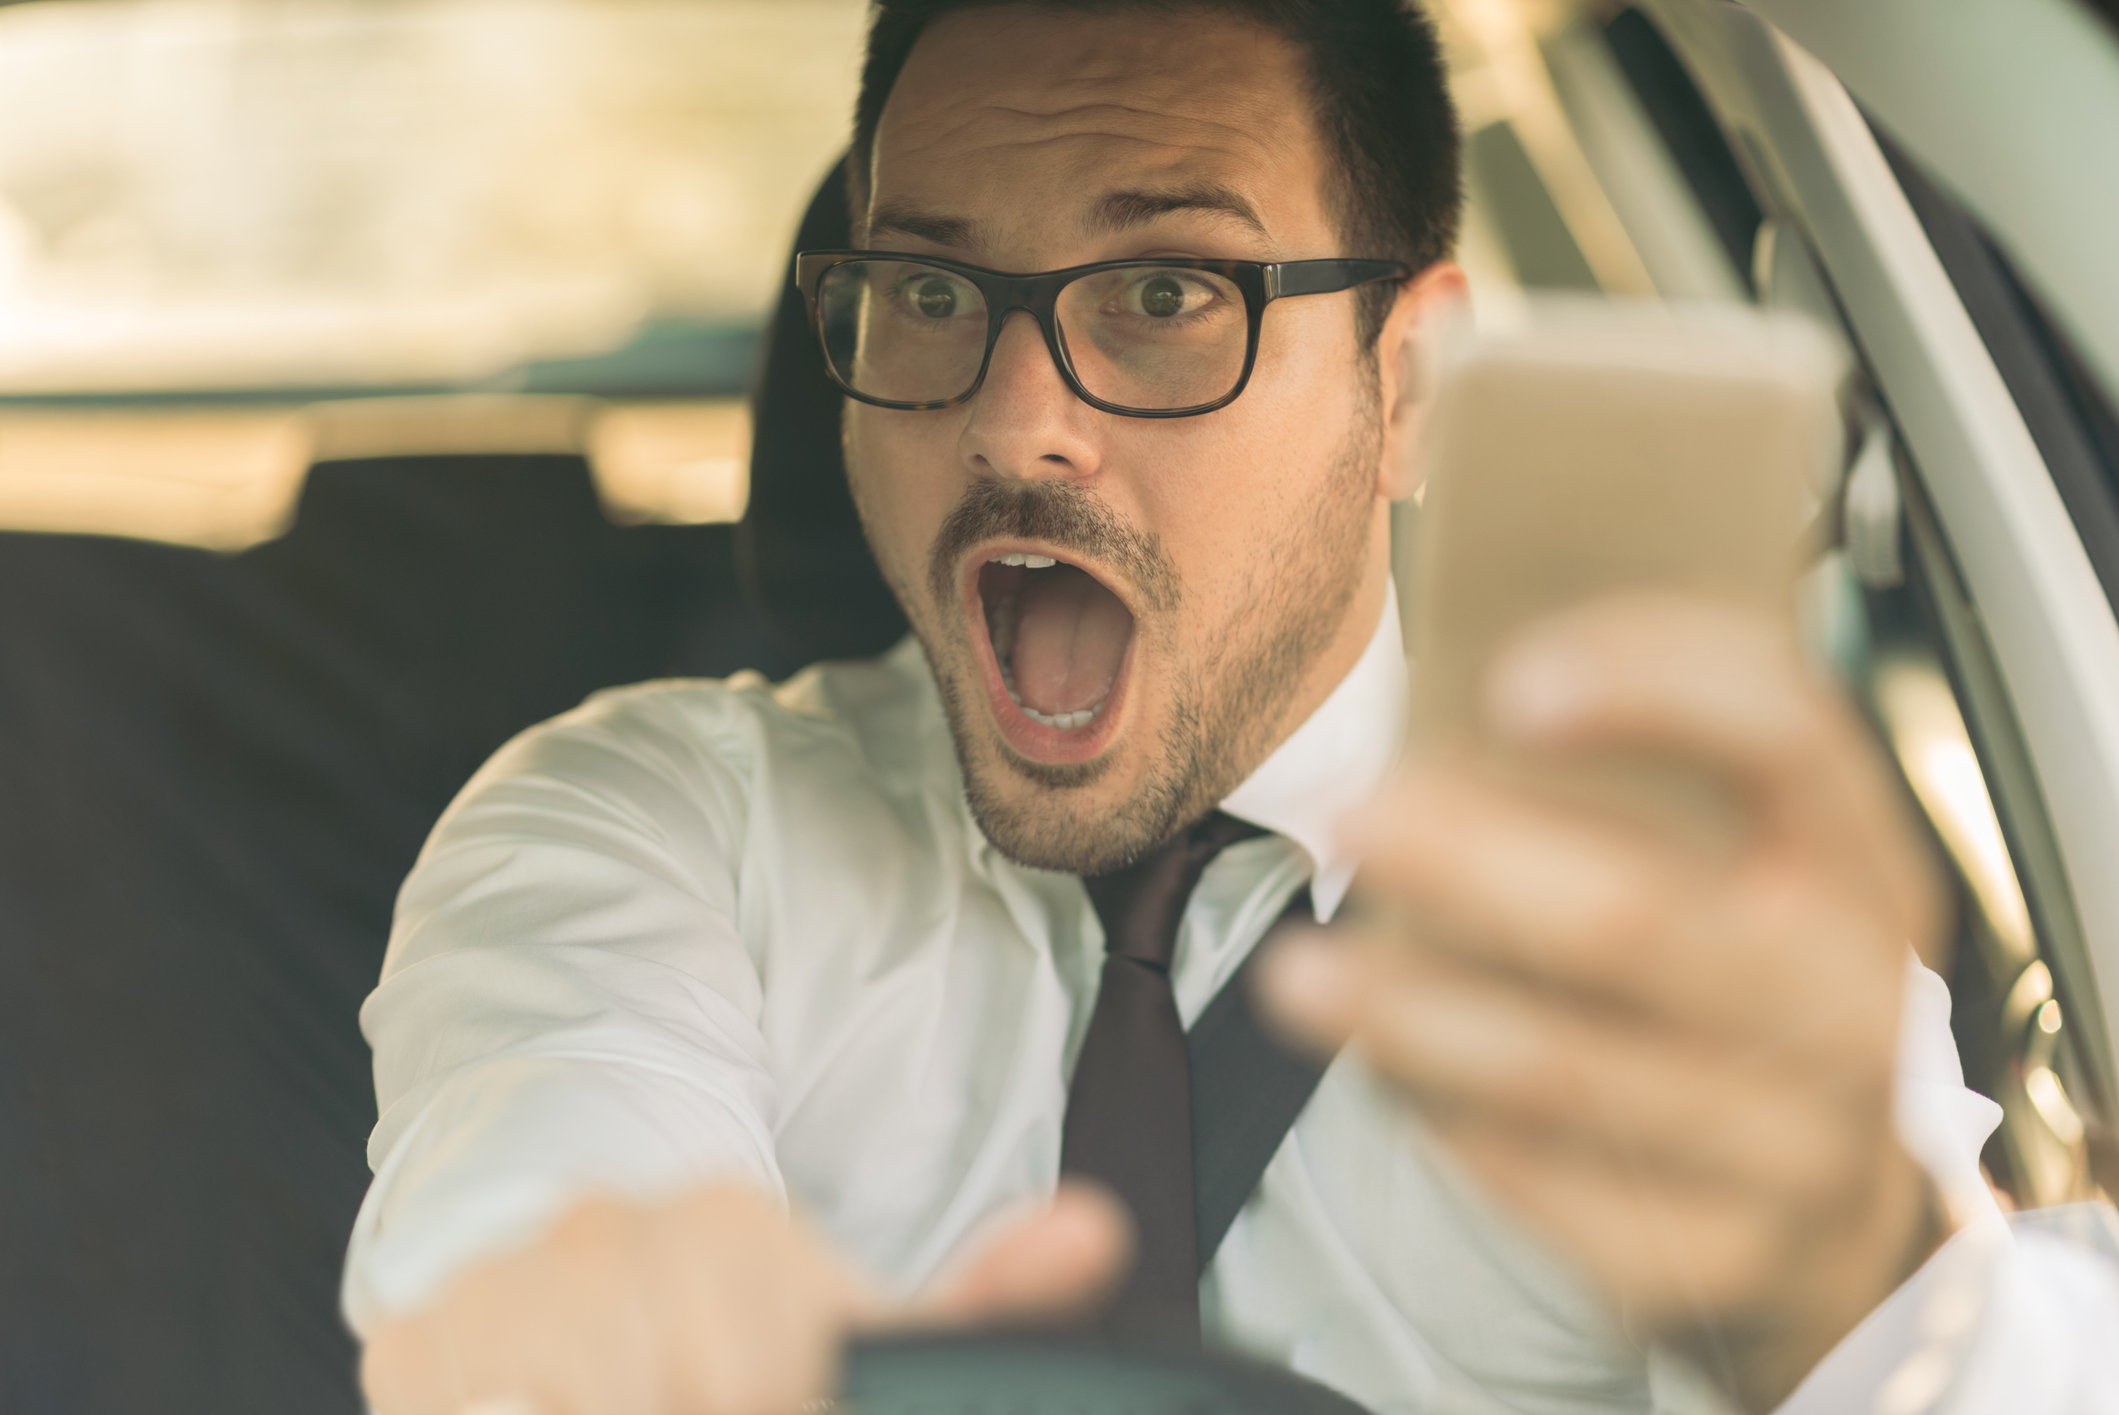 A man holding a phone | Risky driving behavior